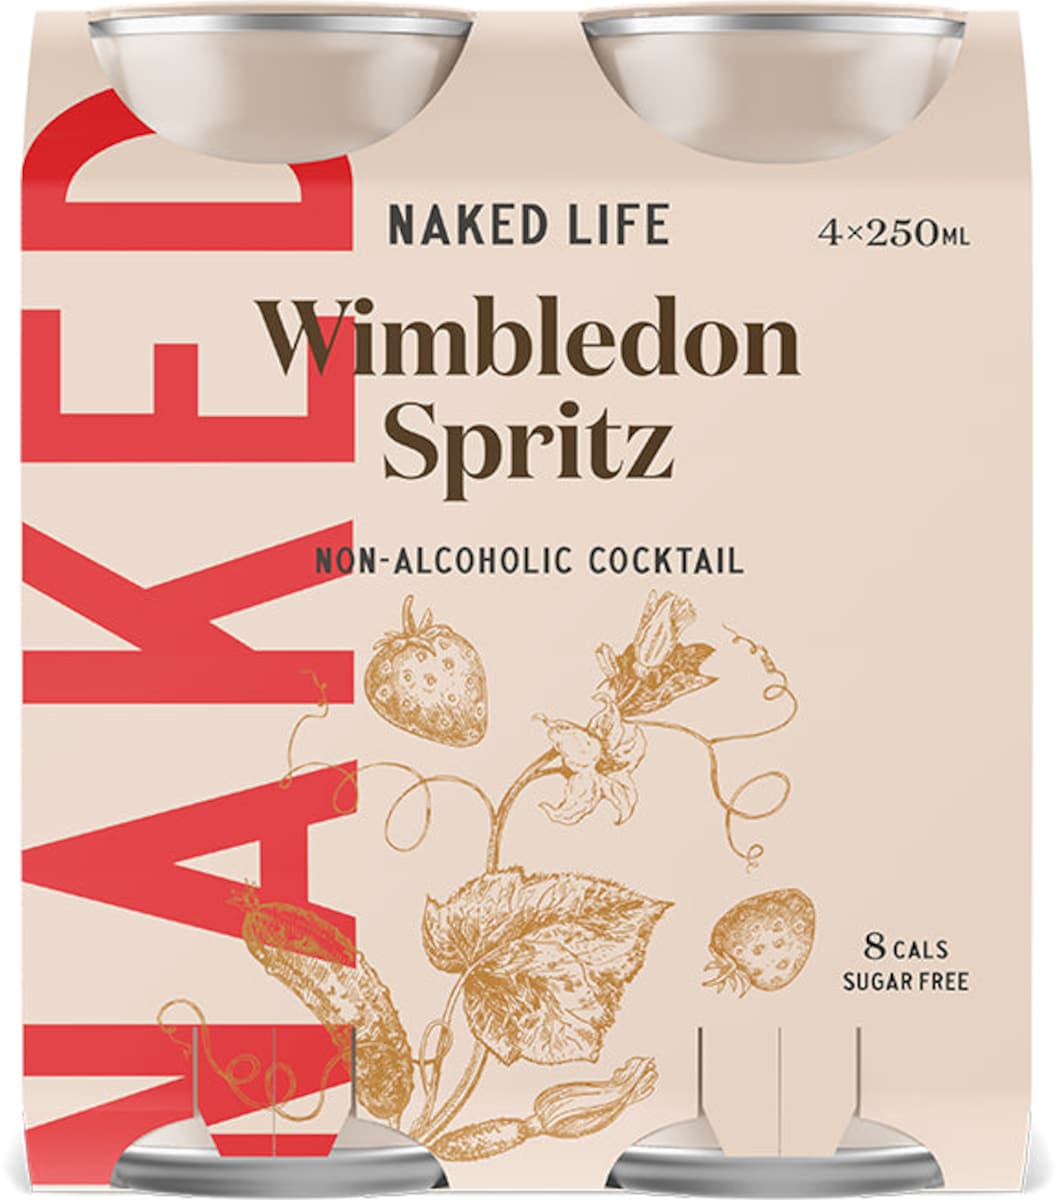 Naked Life Non-Alcoholic Cocktail Wimbledon Spritz 4x250ml